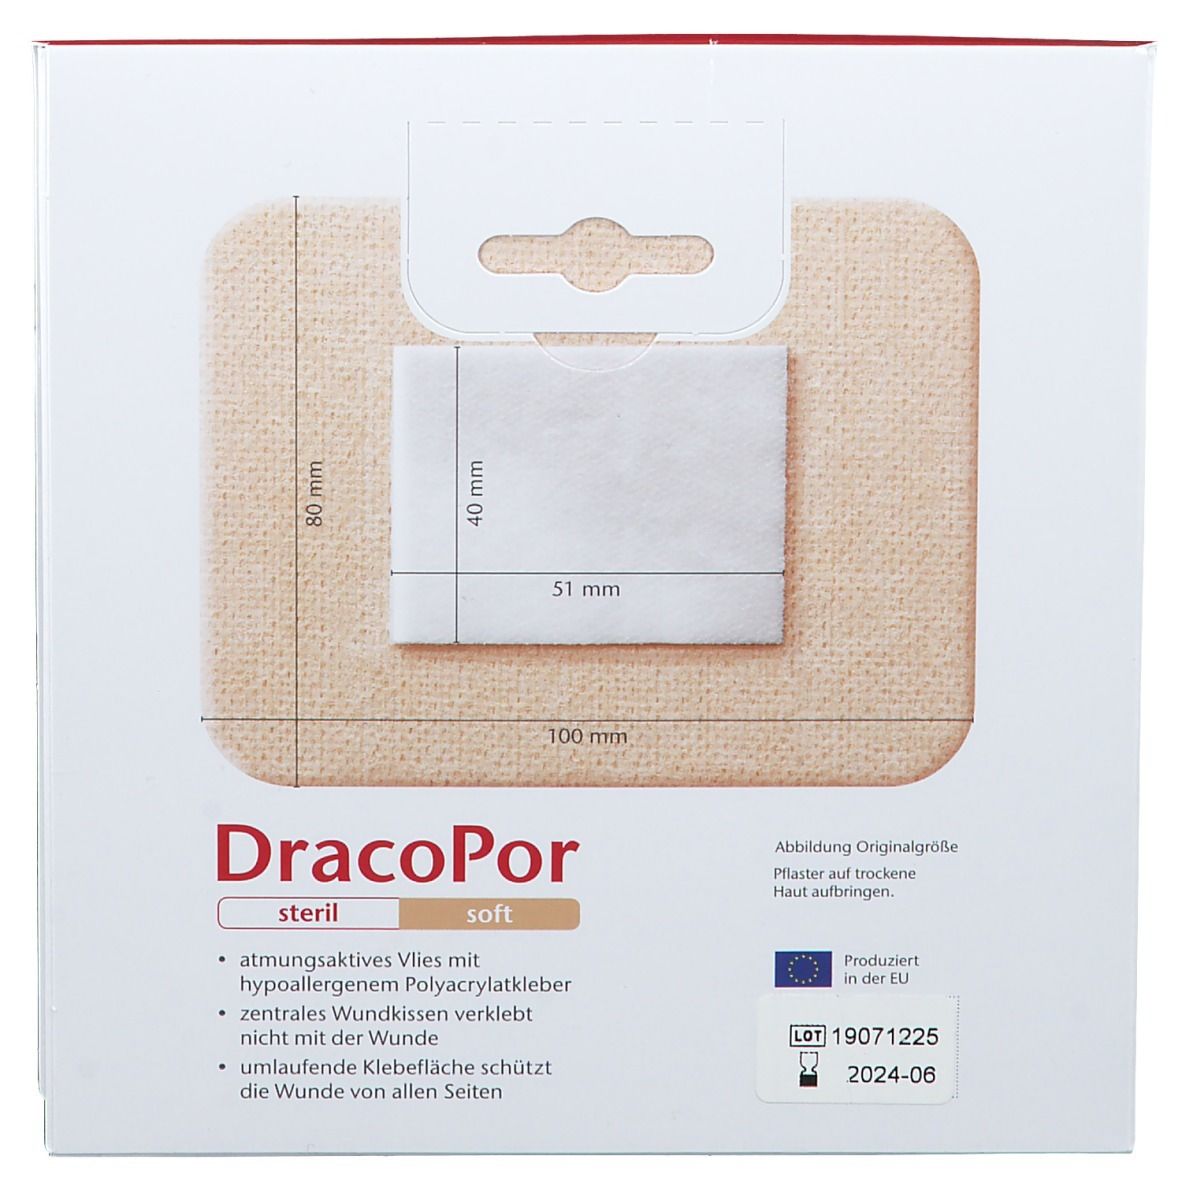 DracoPor Soft hautfarben 8 x 10 cm steril